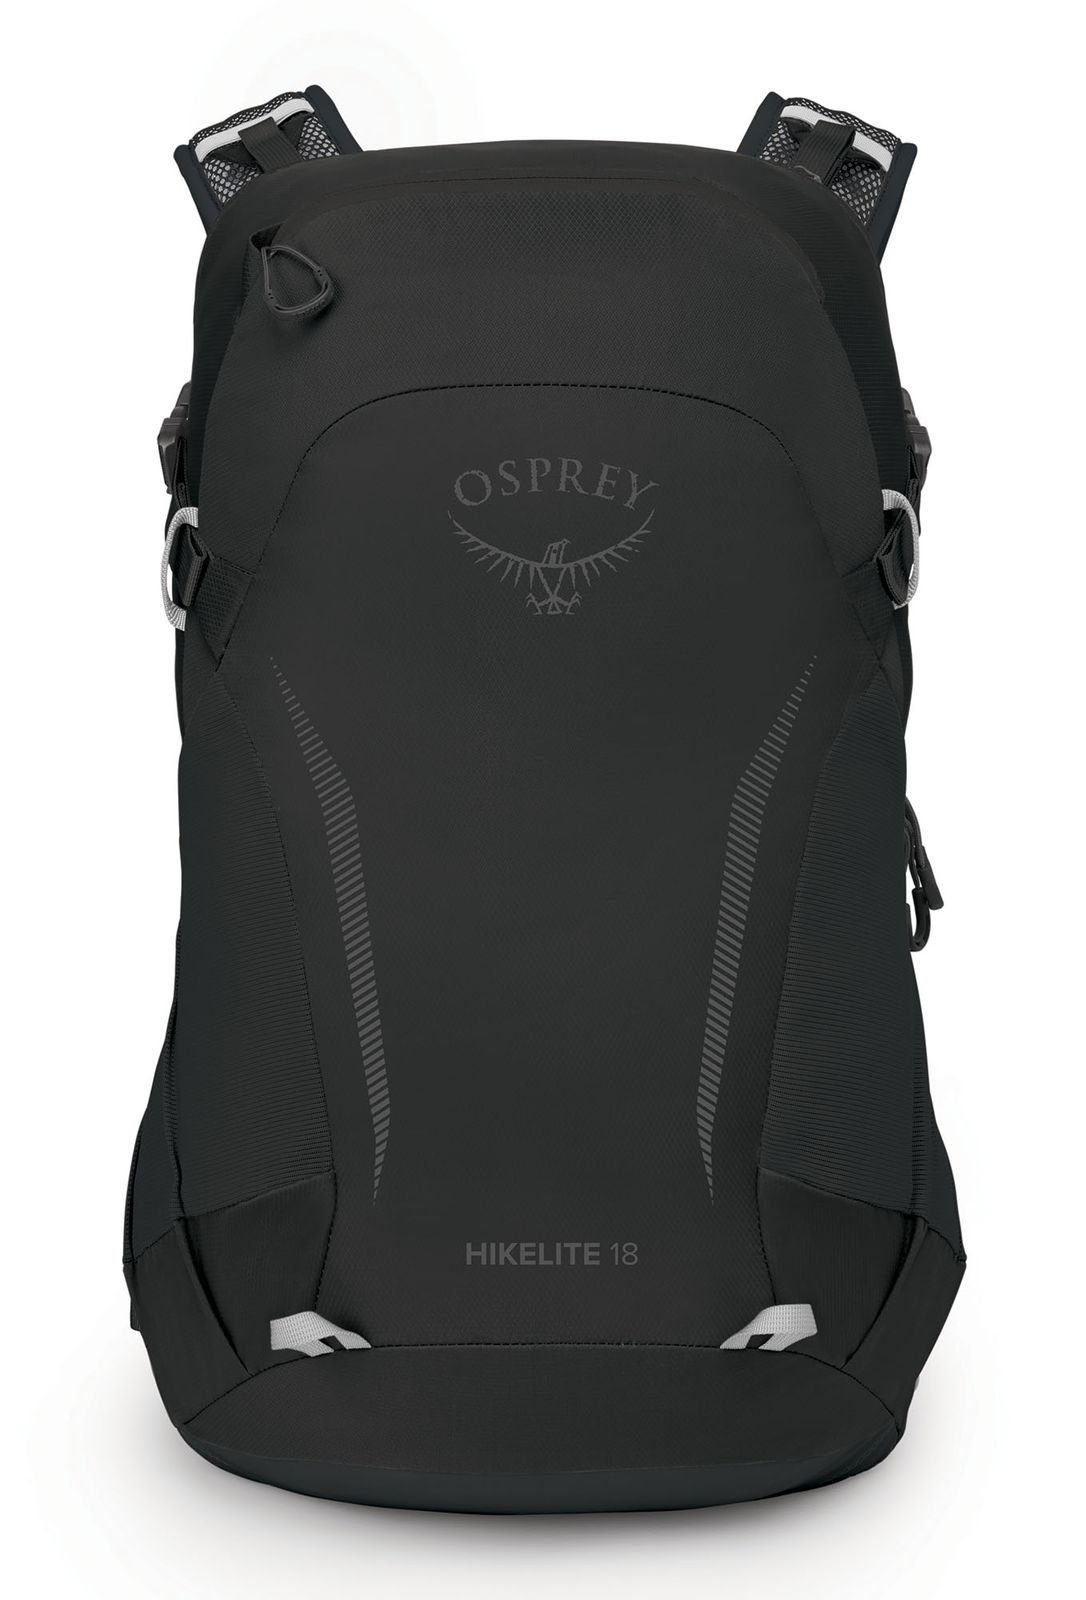 Osprey Rucksack (Set) black